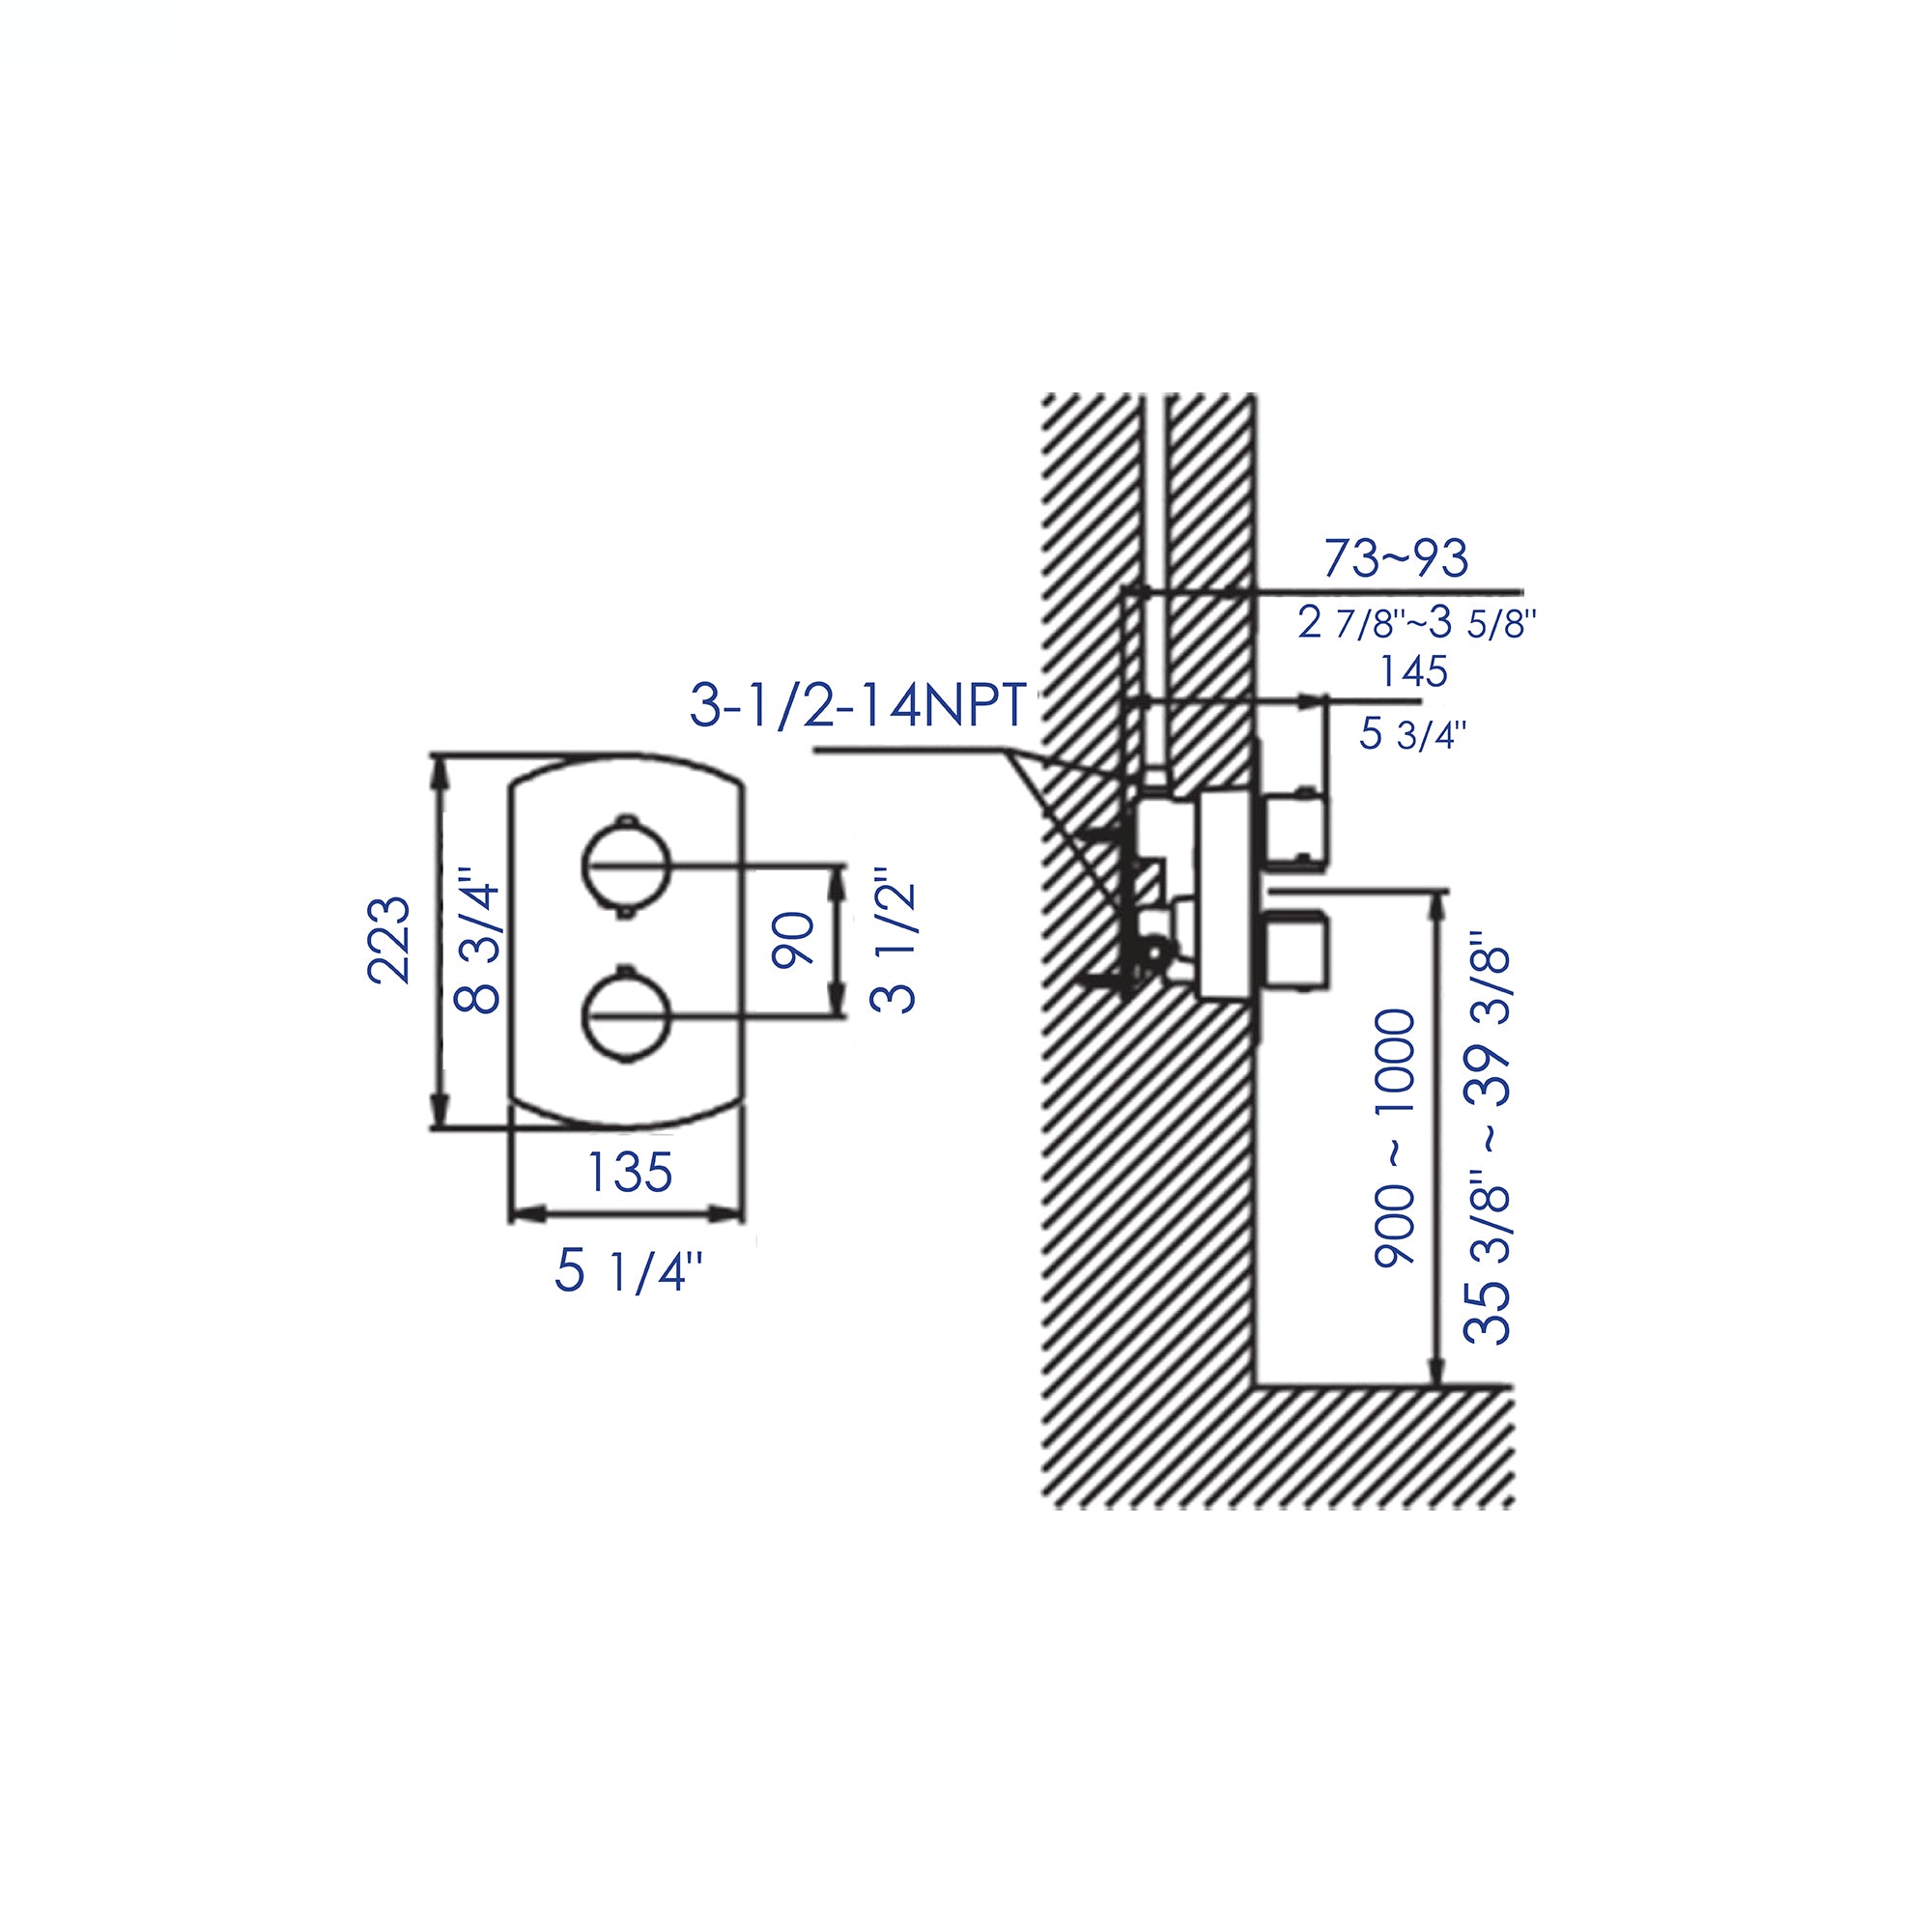 ALFI Brand - Brushed Nickel Round Knob 1 Way Thermostatic Shower Mixer | AB3809-BN